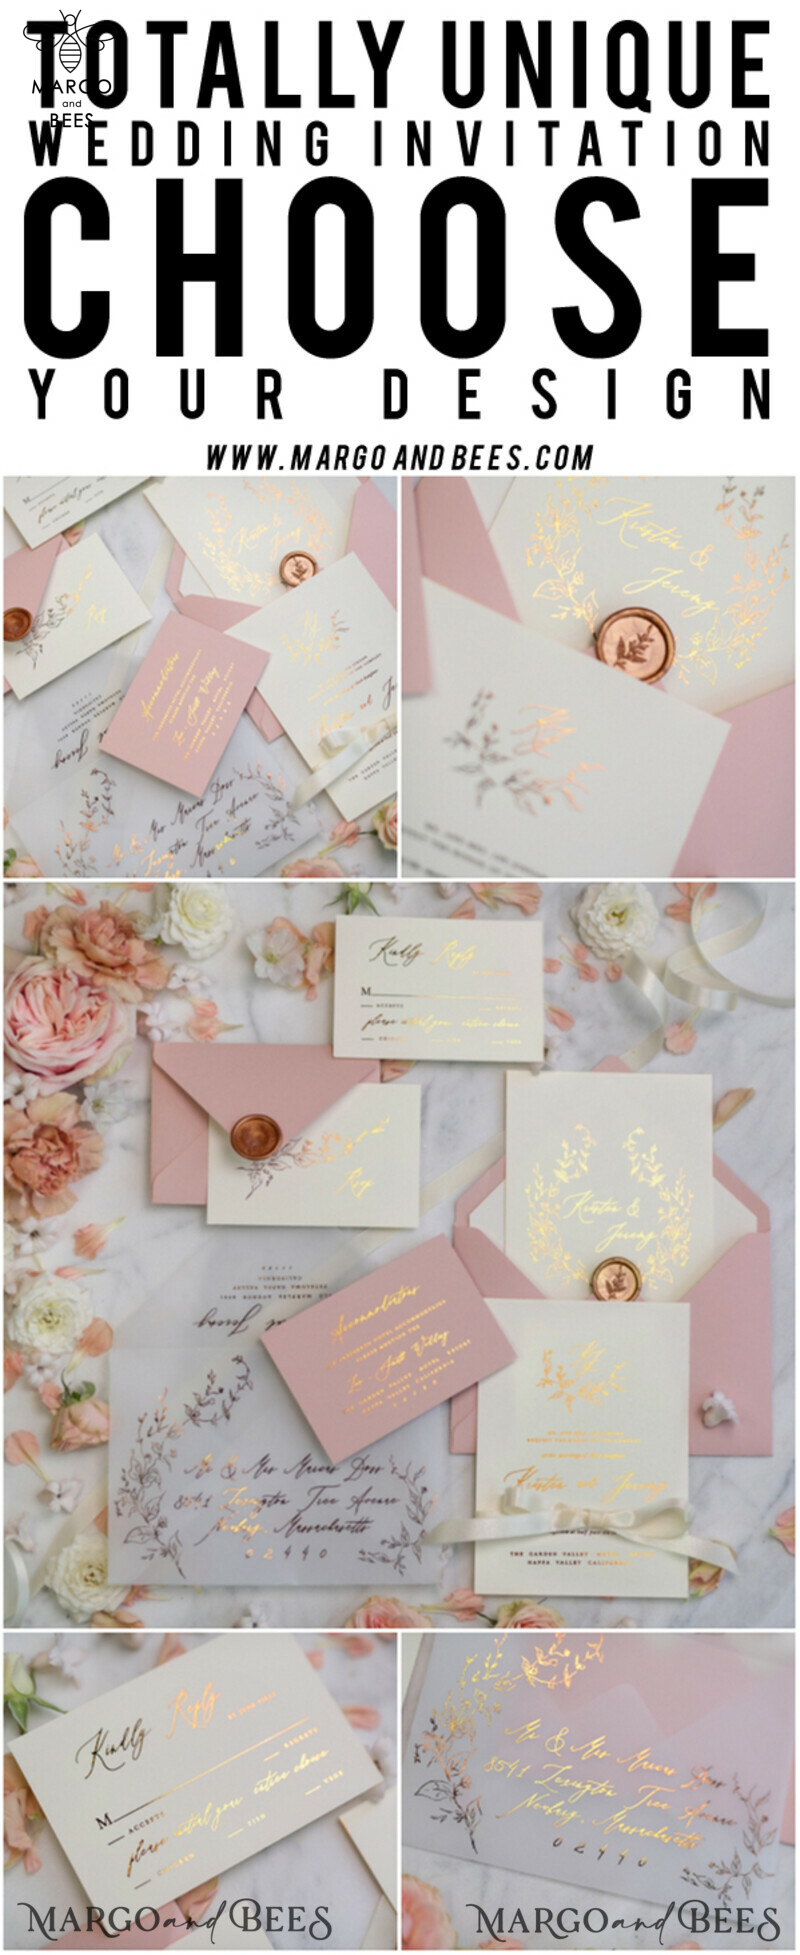 Exquisite Blush Pink and Gold Foil Wedding Invitations: A Unique Vellum Suite for an Elegant Celebration-37